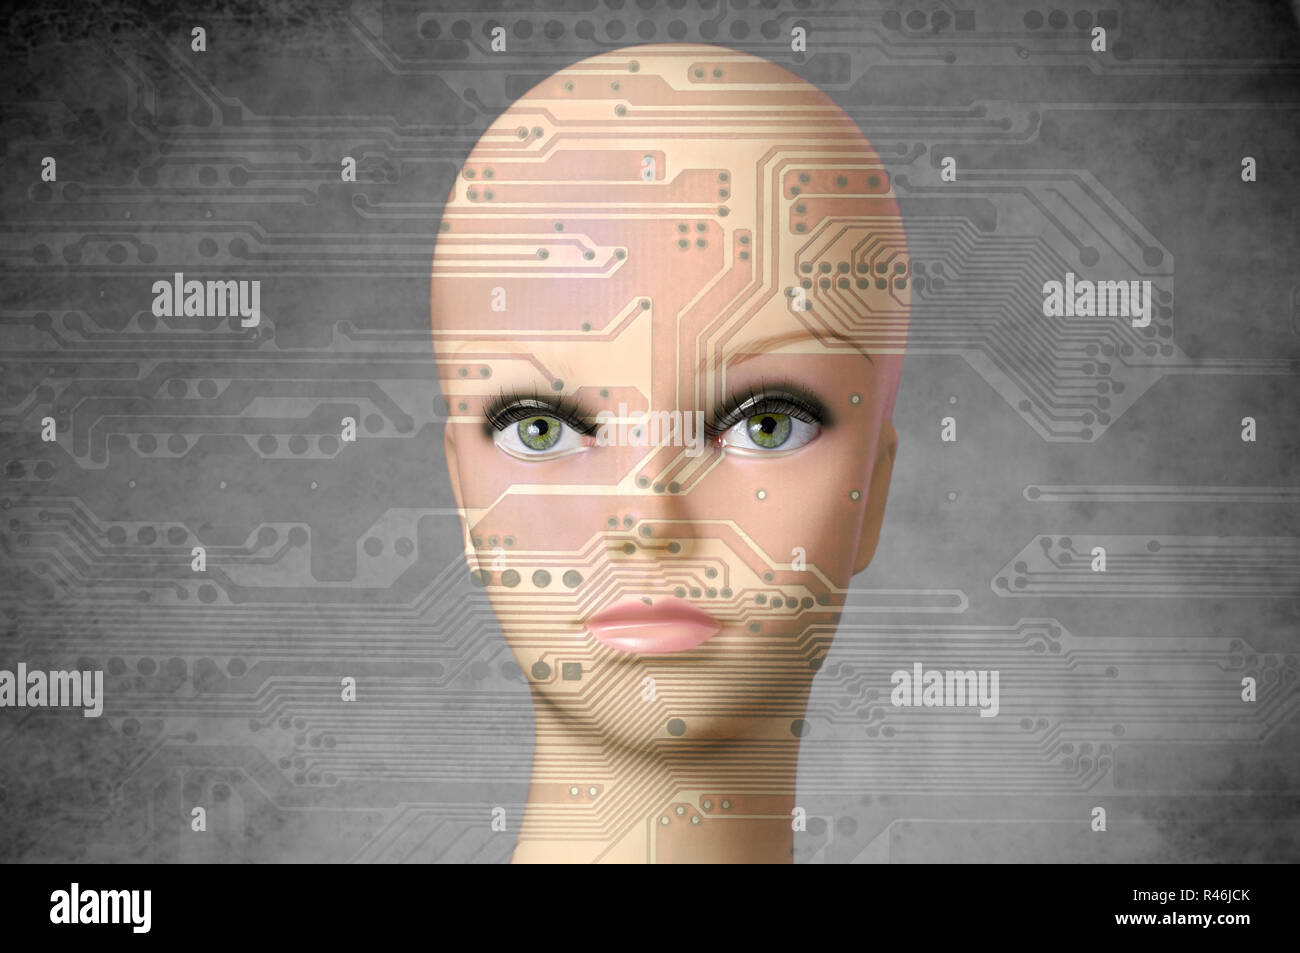 Female cyborg head with human eyes Stock Photo